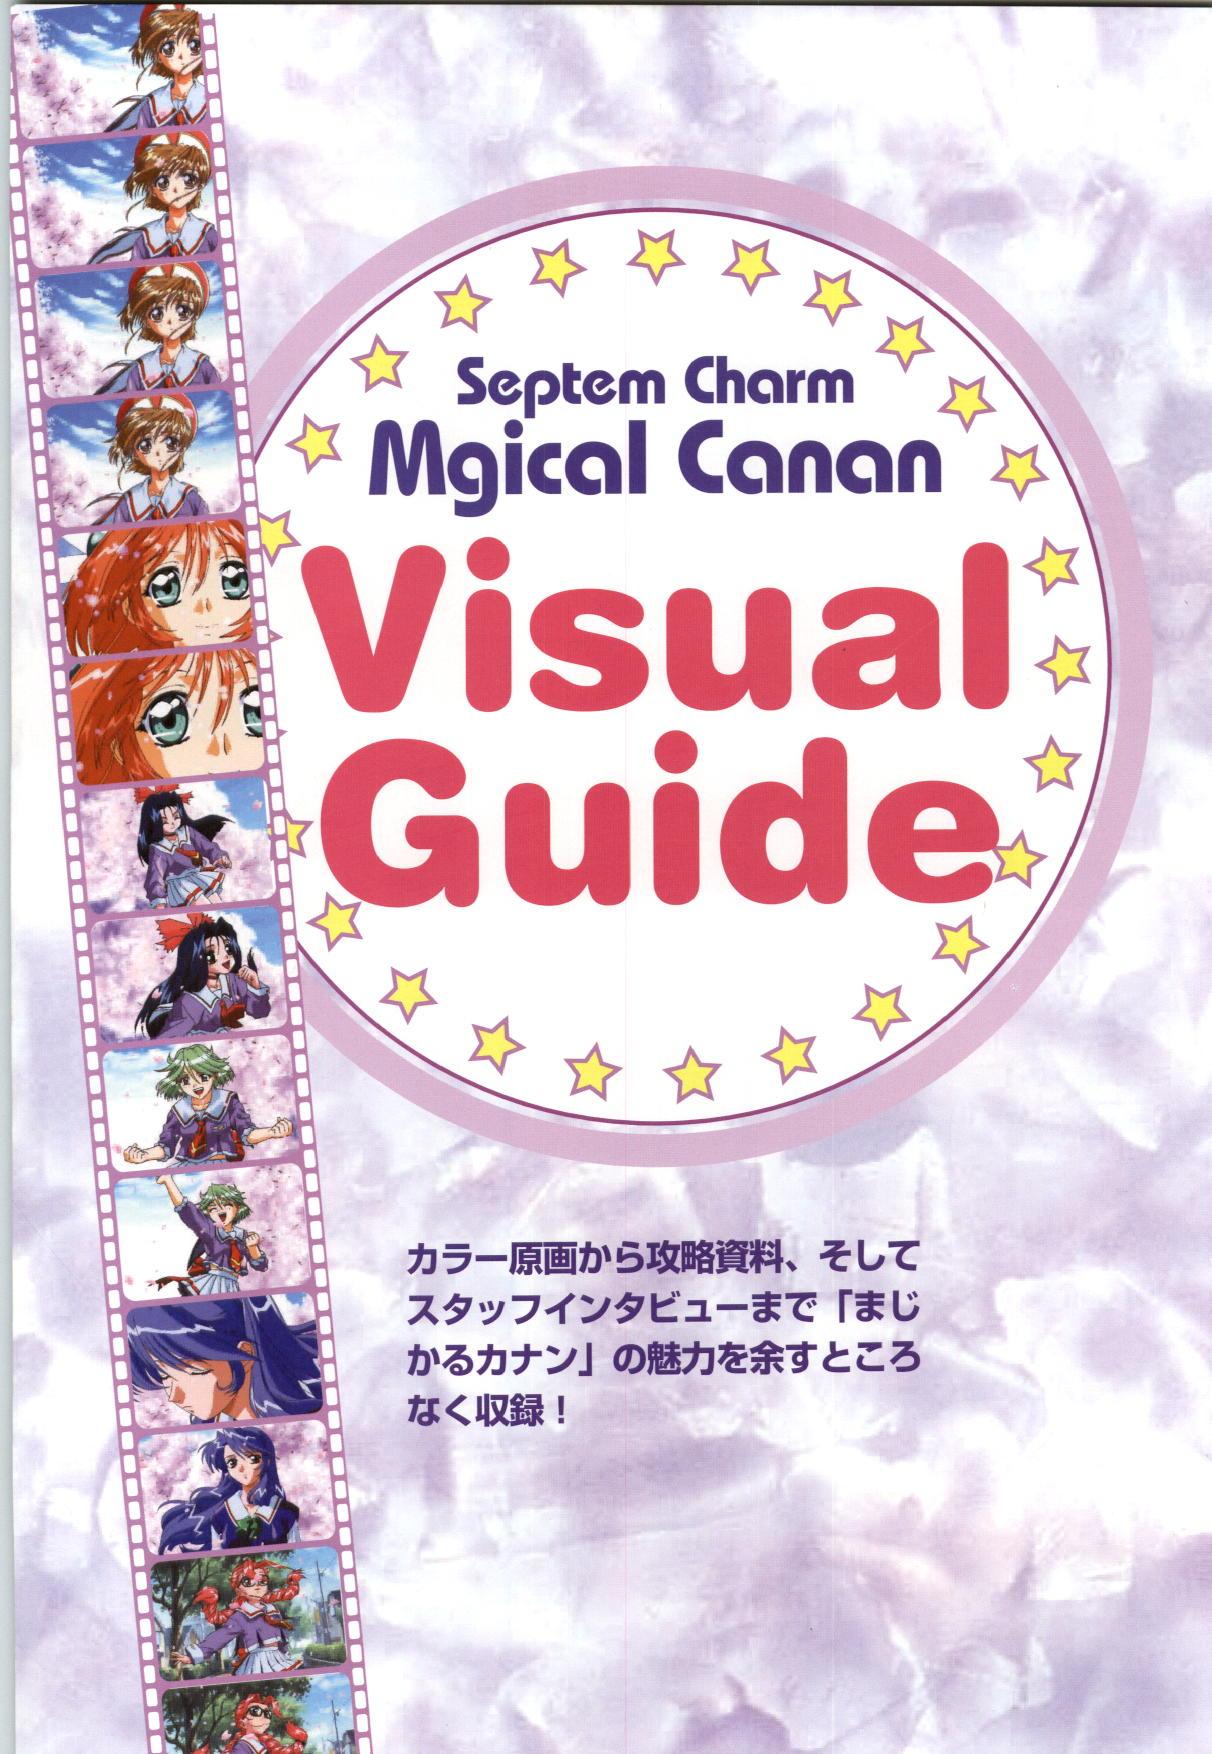 Septem Charm Magical Canan Visual Guide - Compass Official Artbook 3